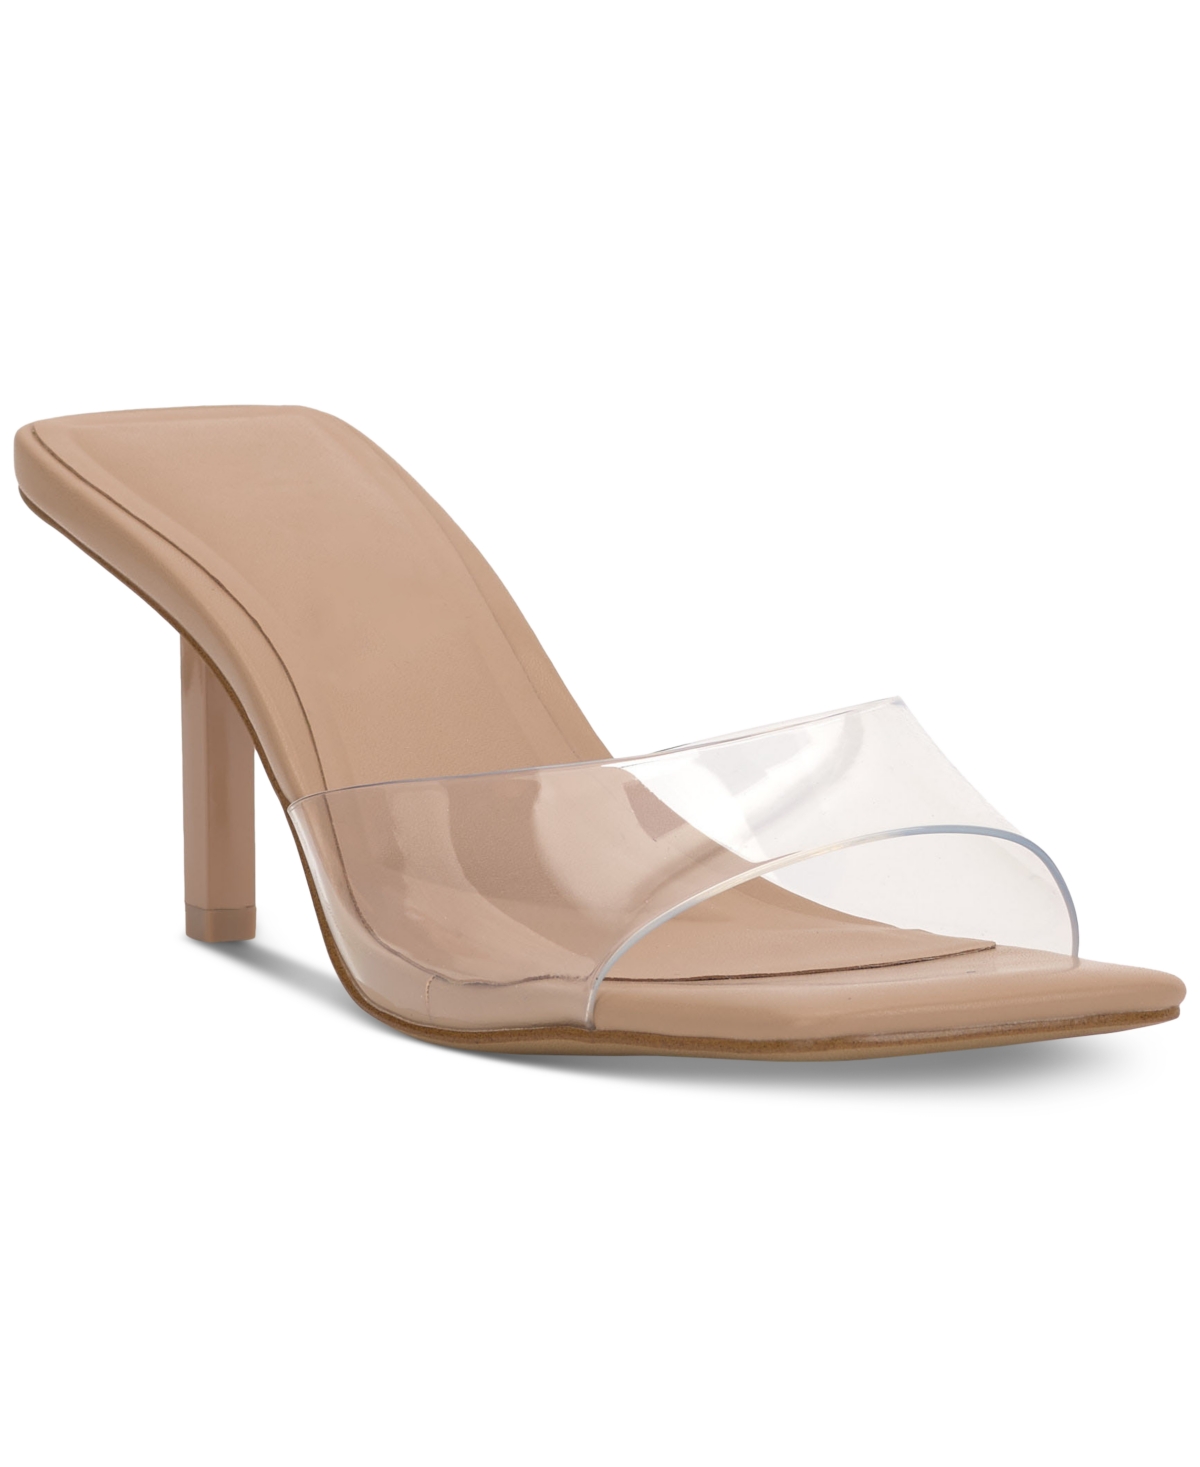 Dalea Slide Dress Sandals, Created for Macy's - Clear/Denim